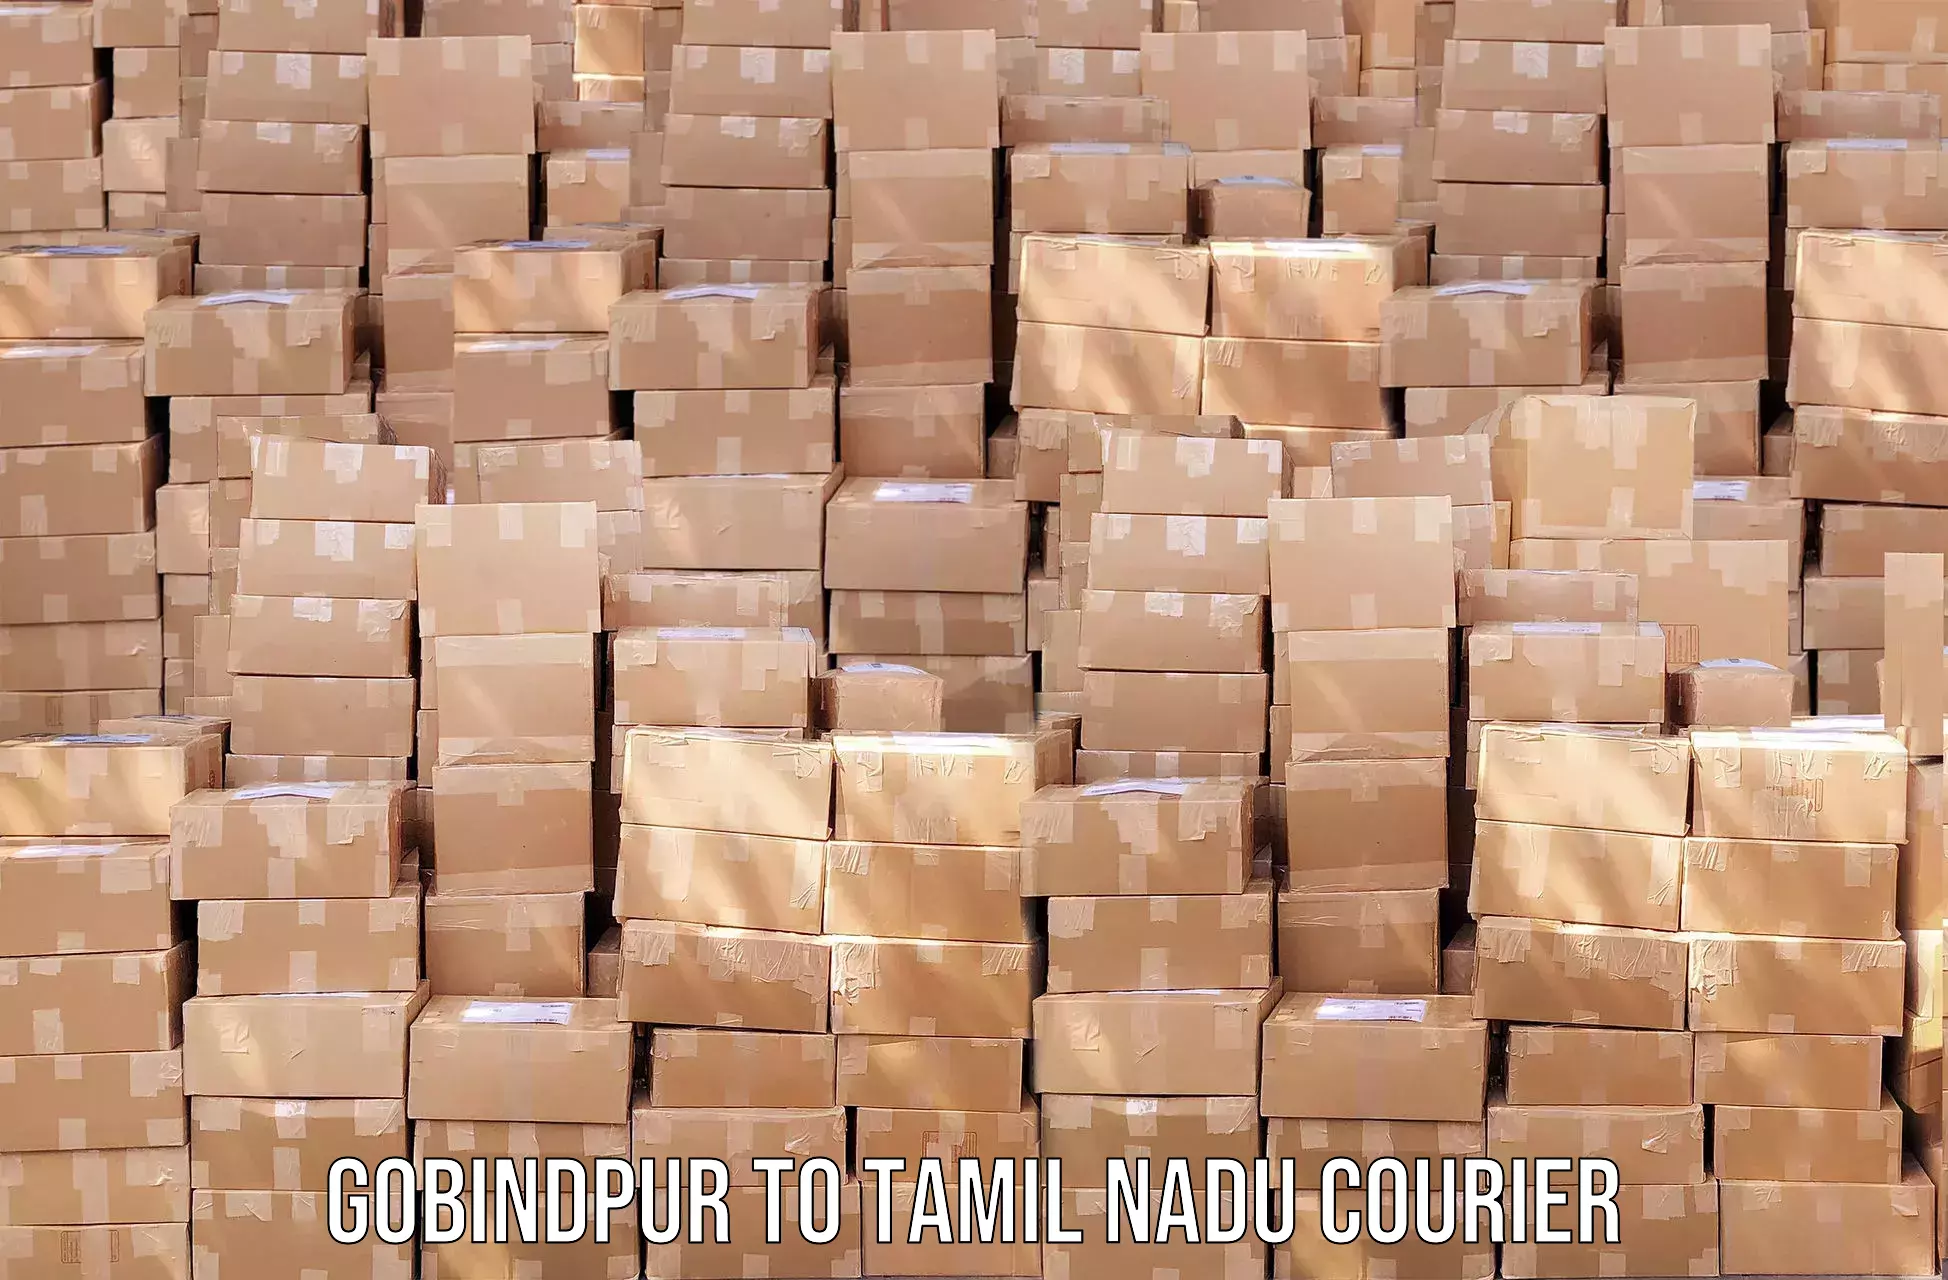 Package delivery network Gobindpur to Kodumudi